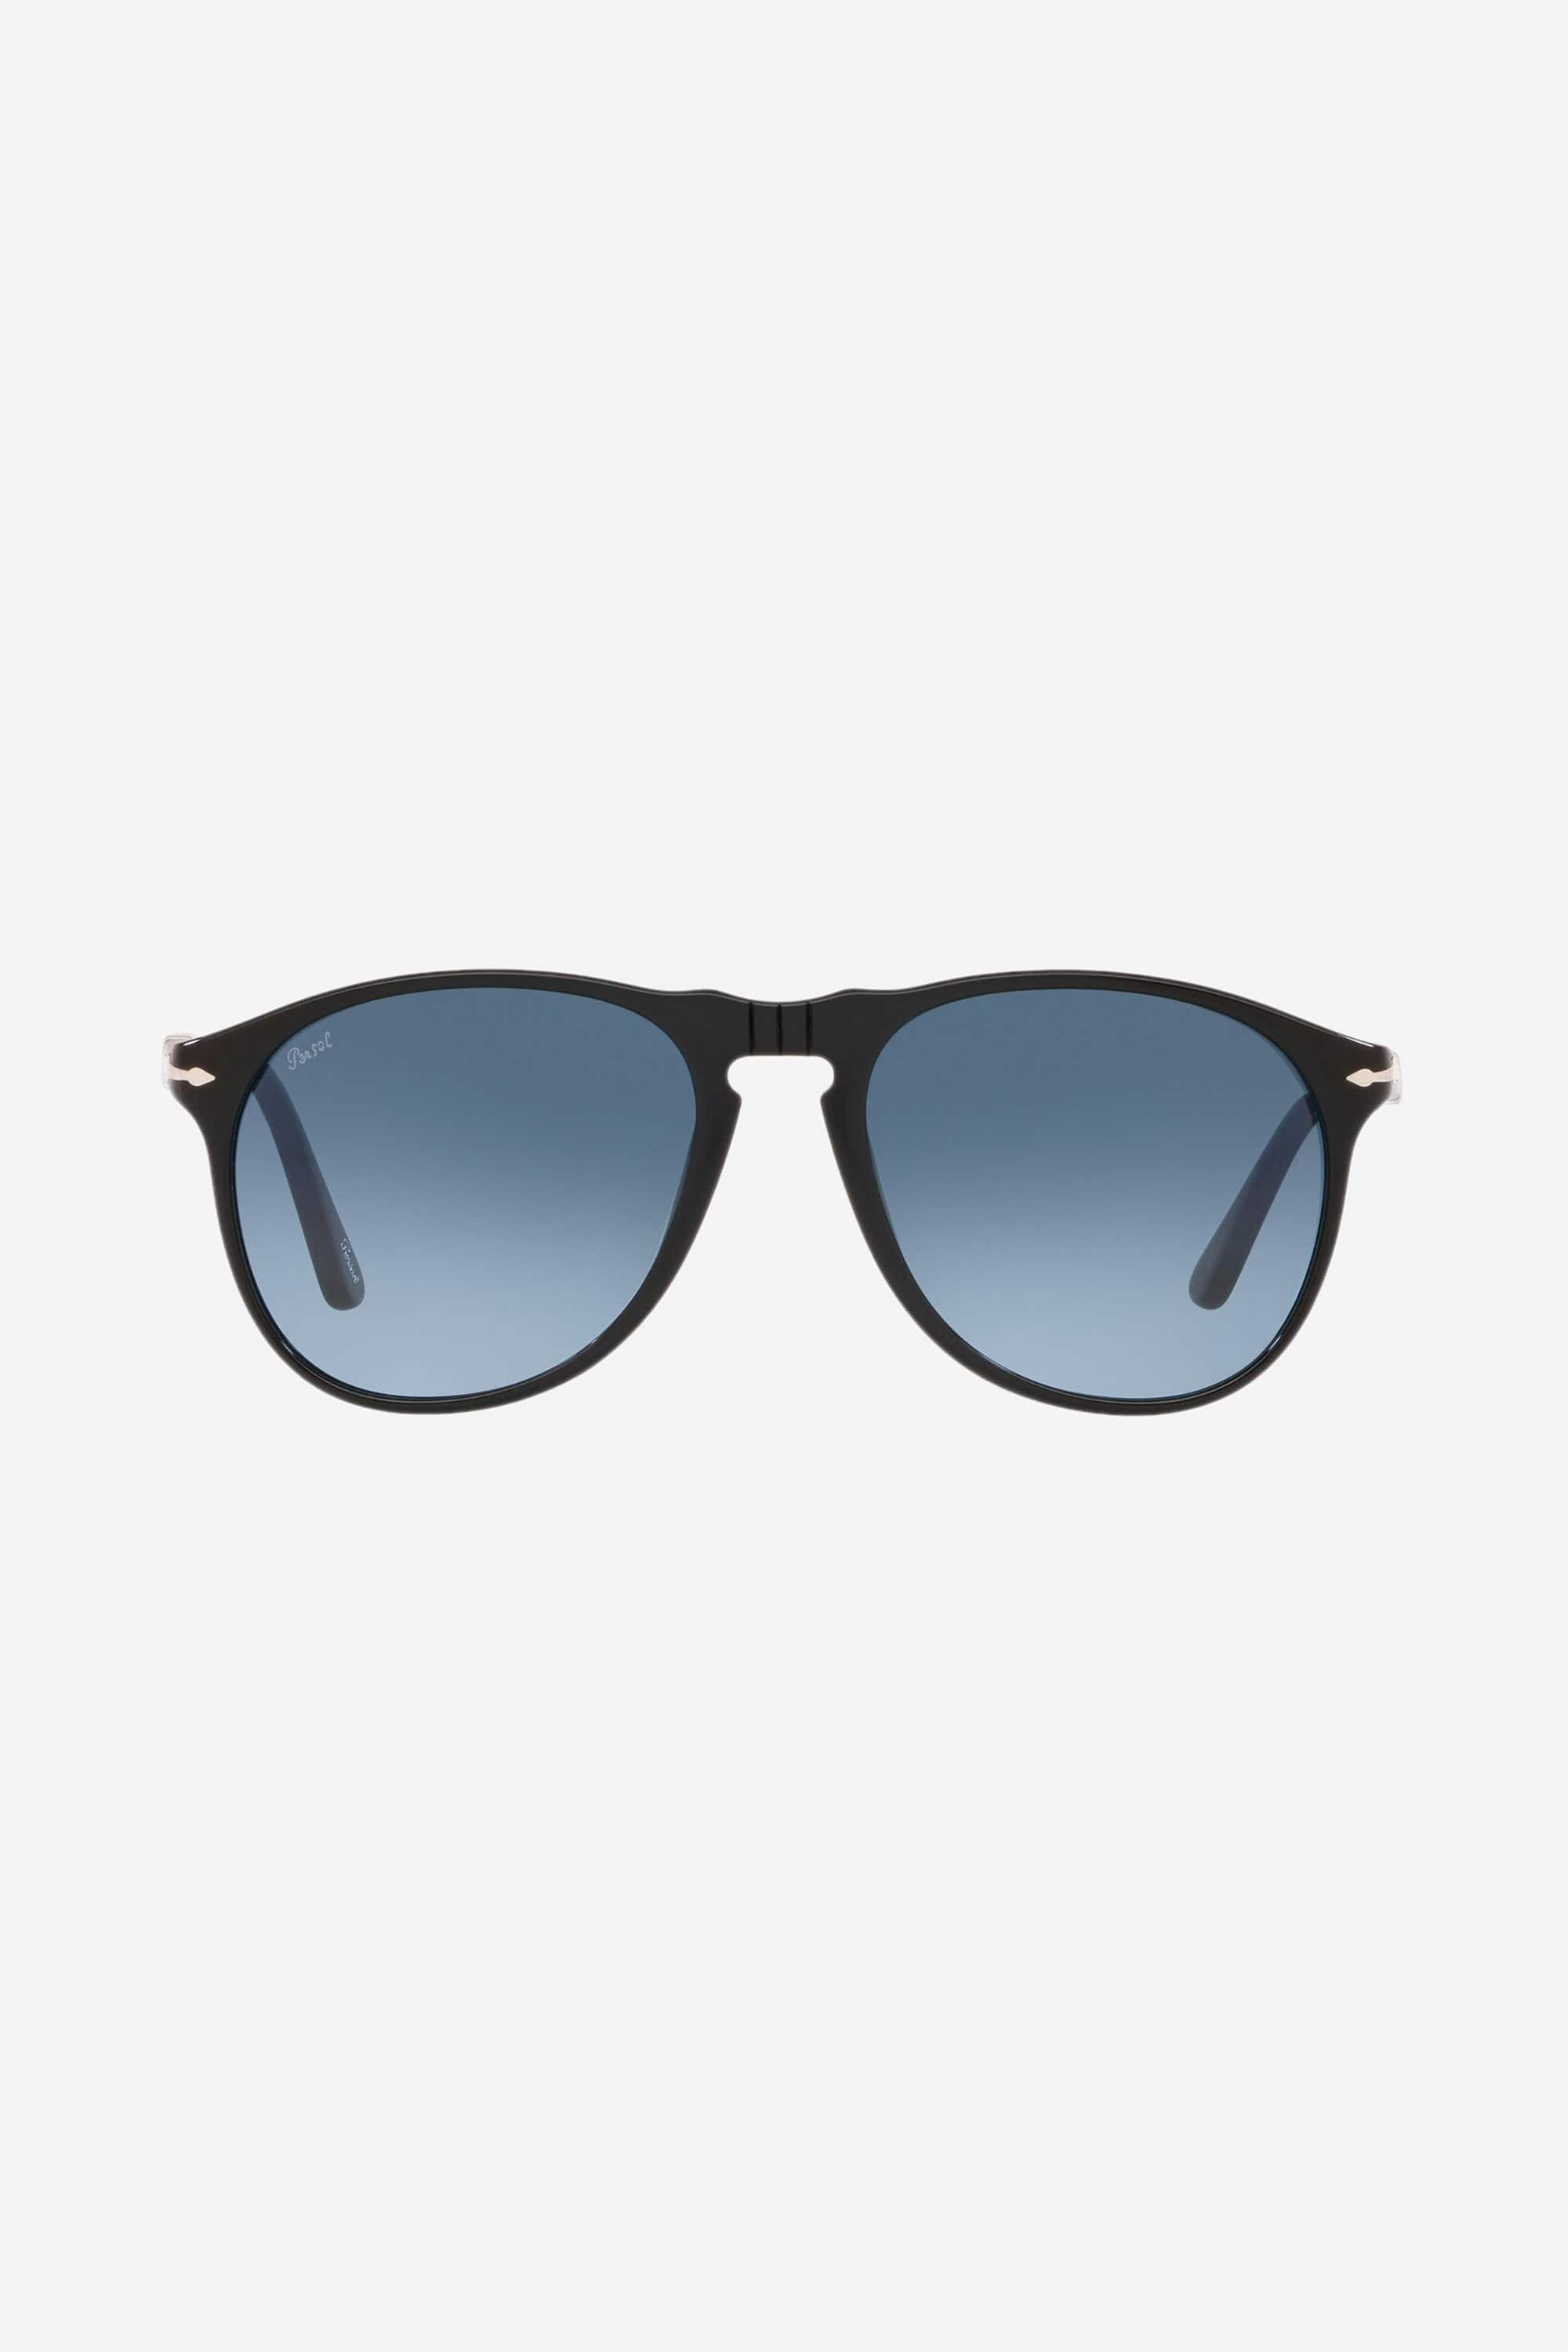 Persol pilot light black sunglasses - Eyewear Club